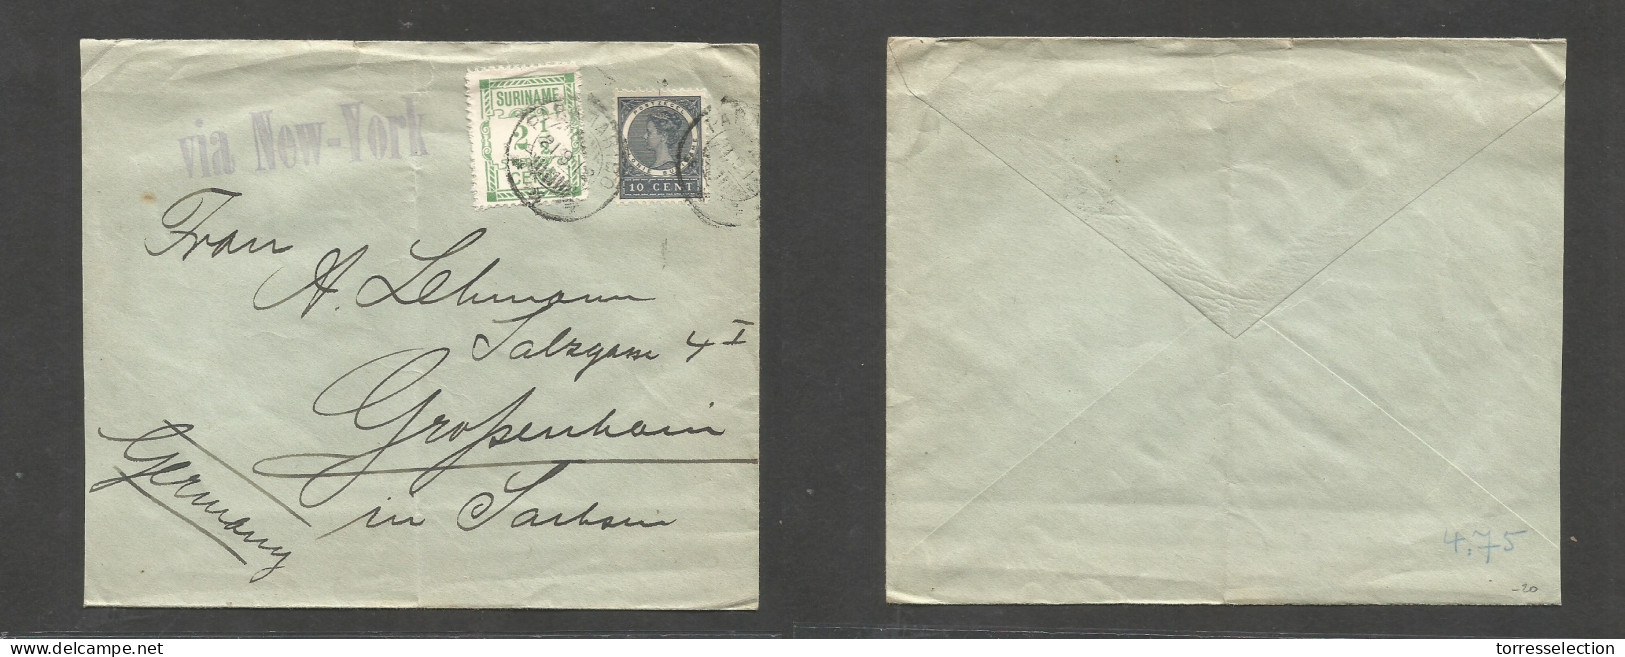 SURINAME. 1912 (21 Sept) Paramaribo - Germany, Grospenheim Via New York. Multifkd Env. Better Usage. SALE. - Surinam